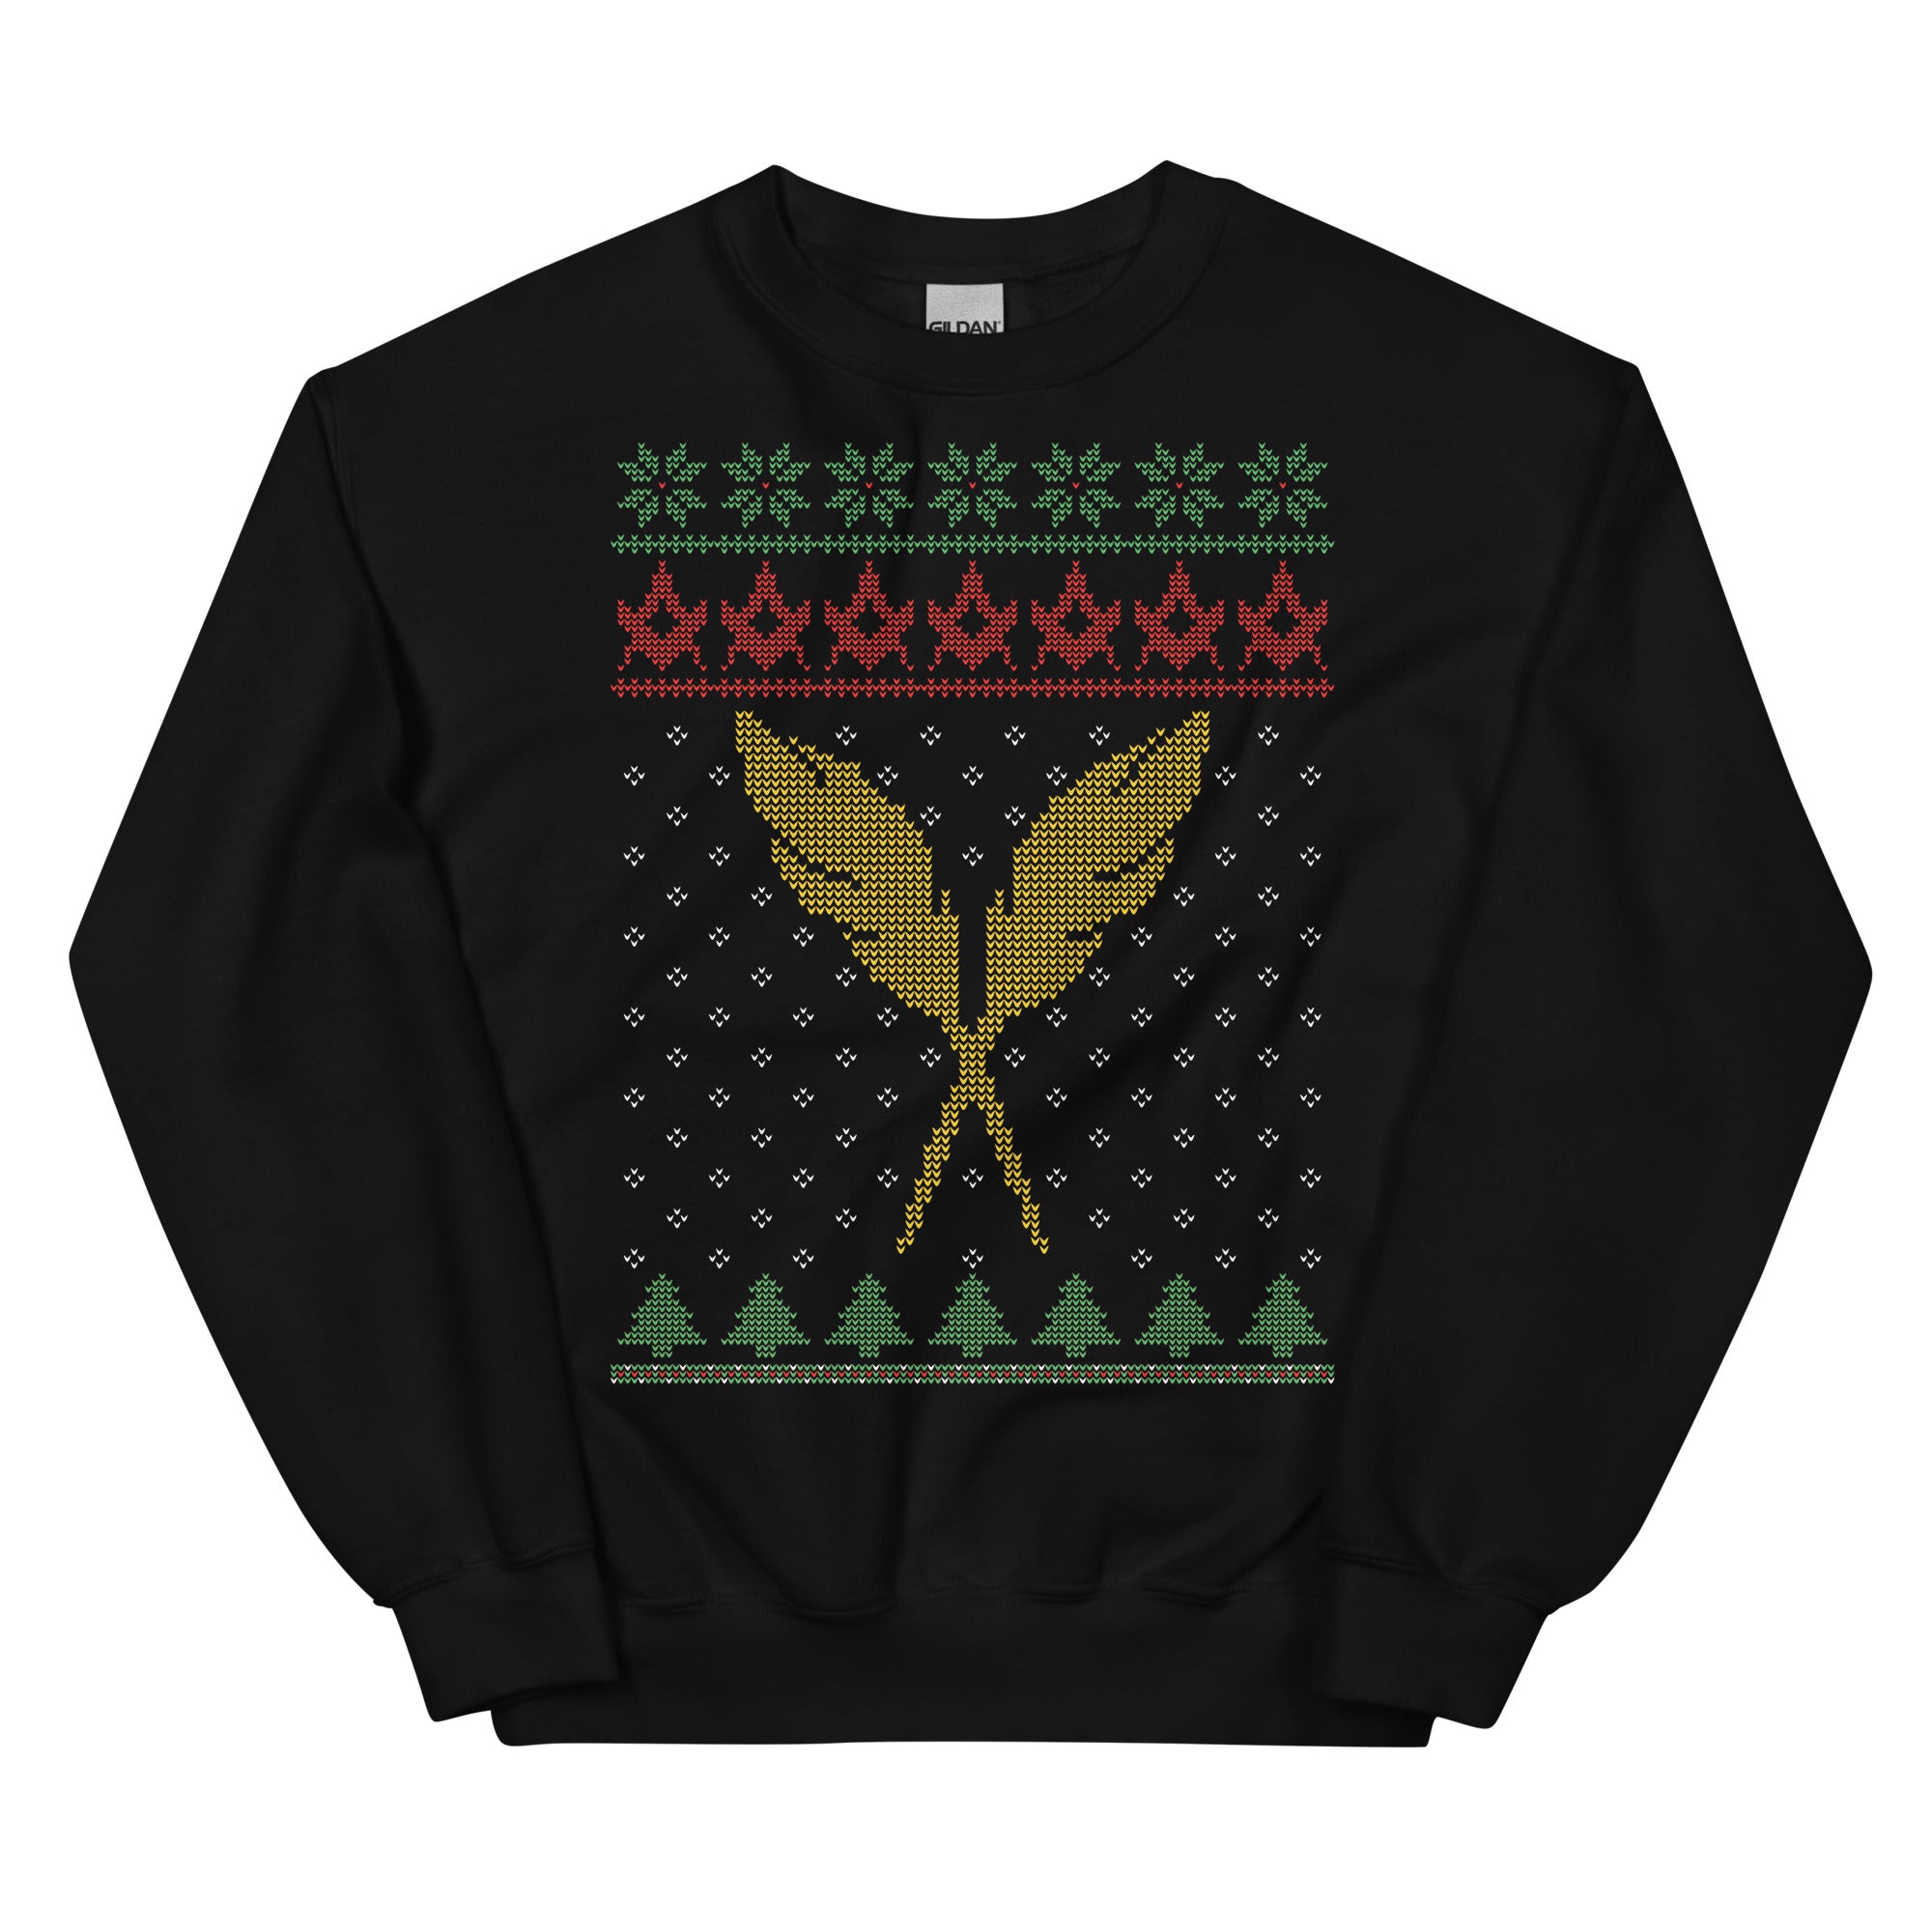 Secretary's Christmas Sweater